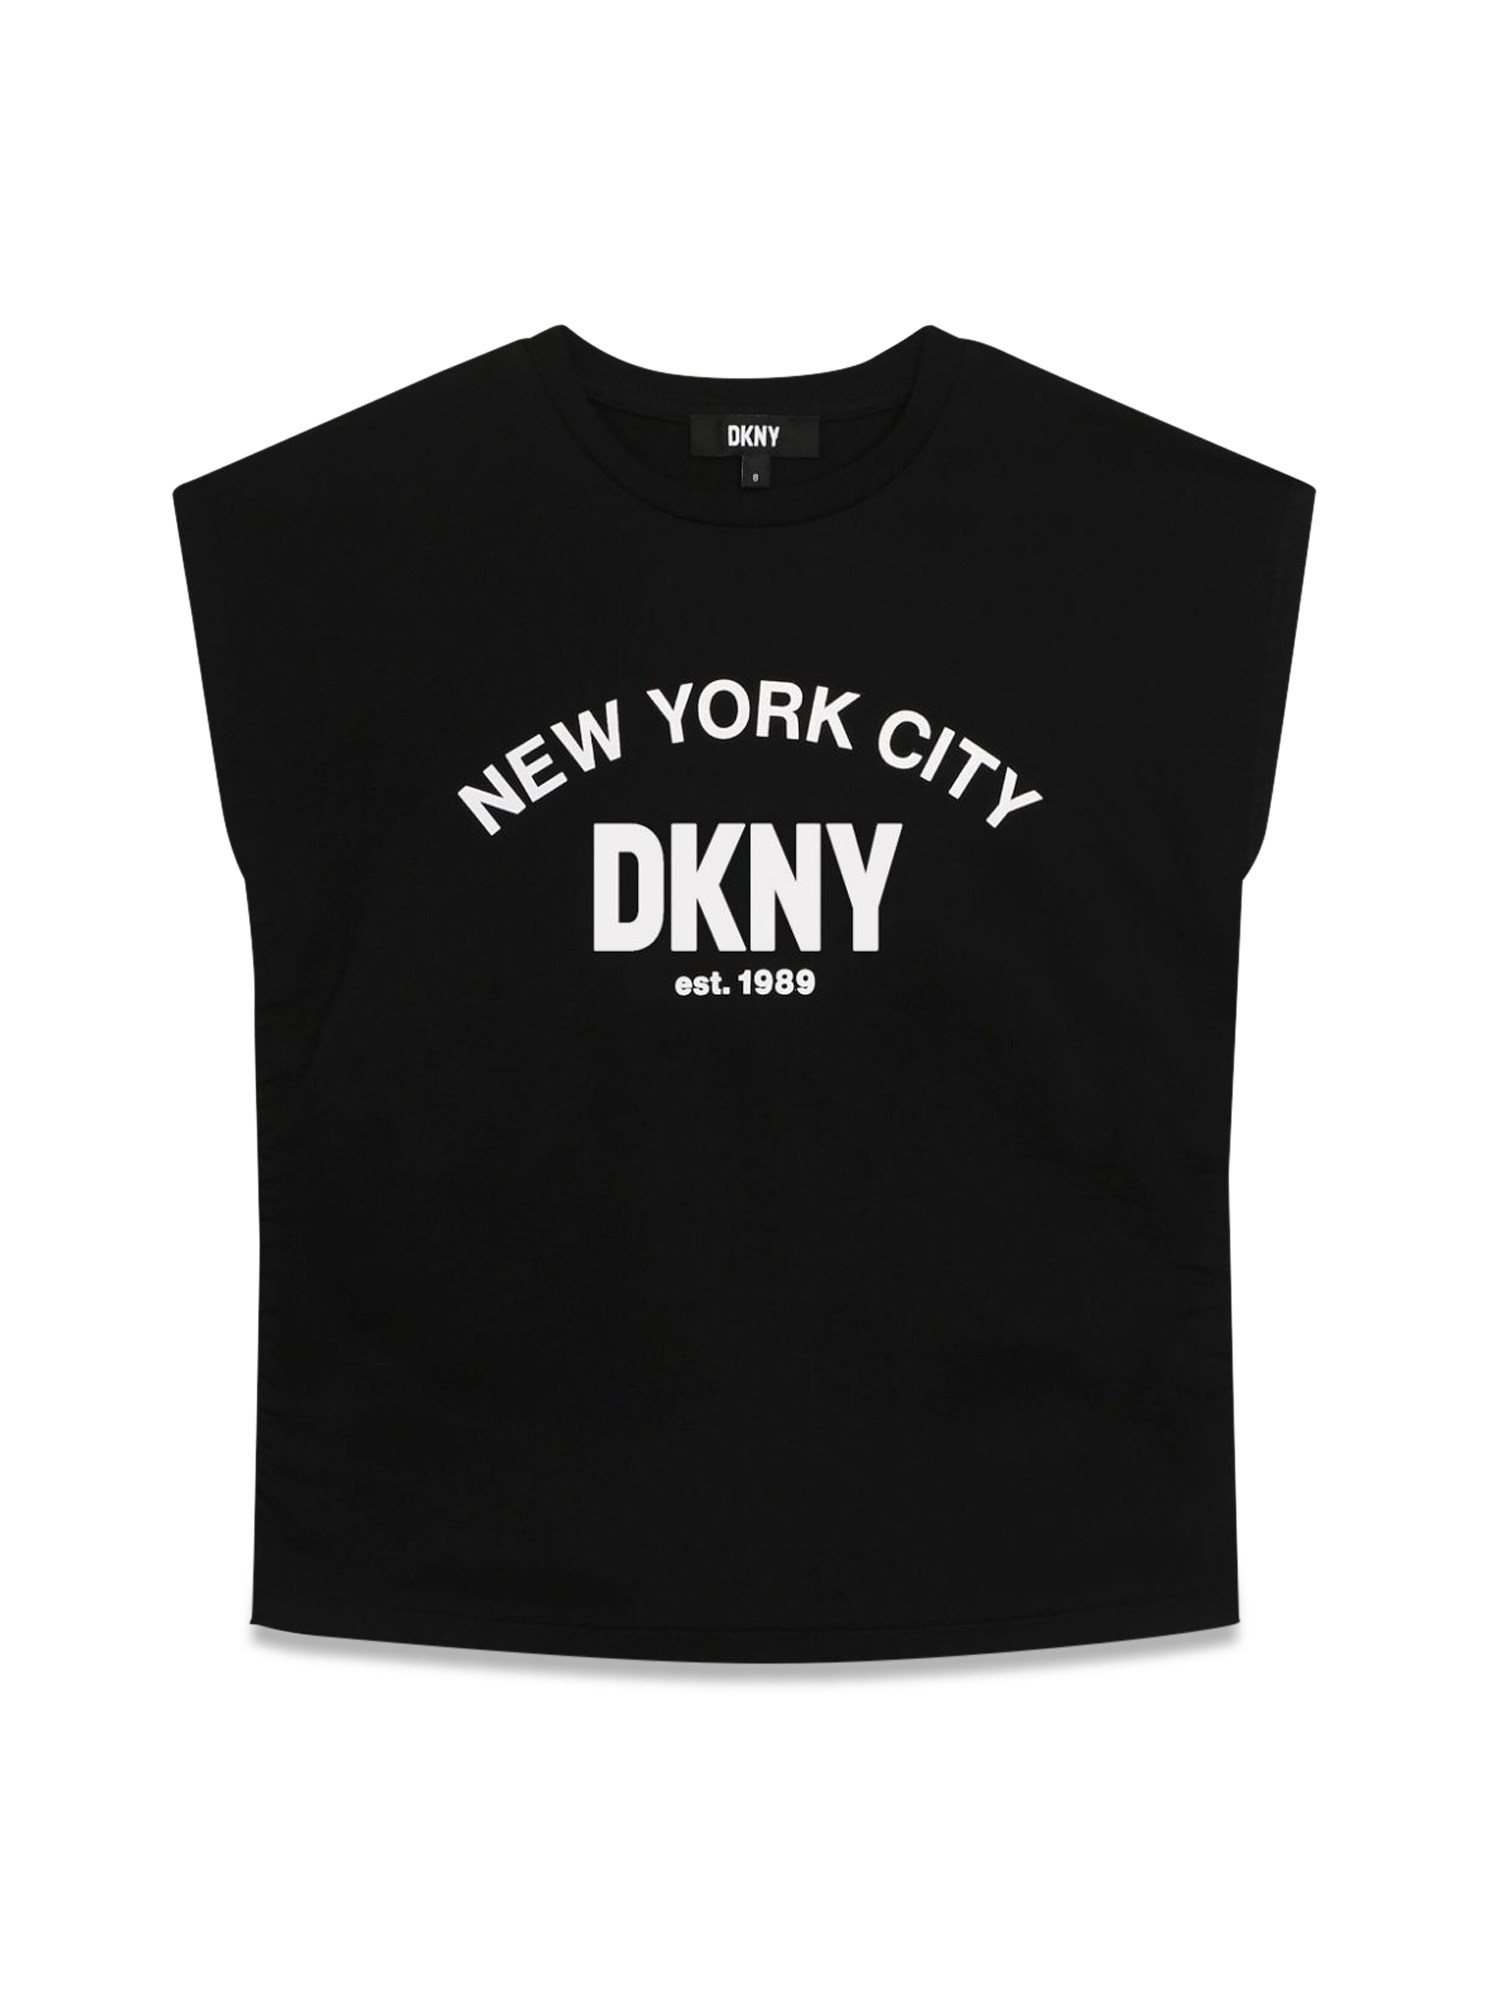 dkny tee shirt